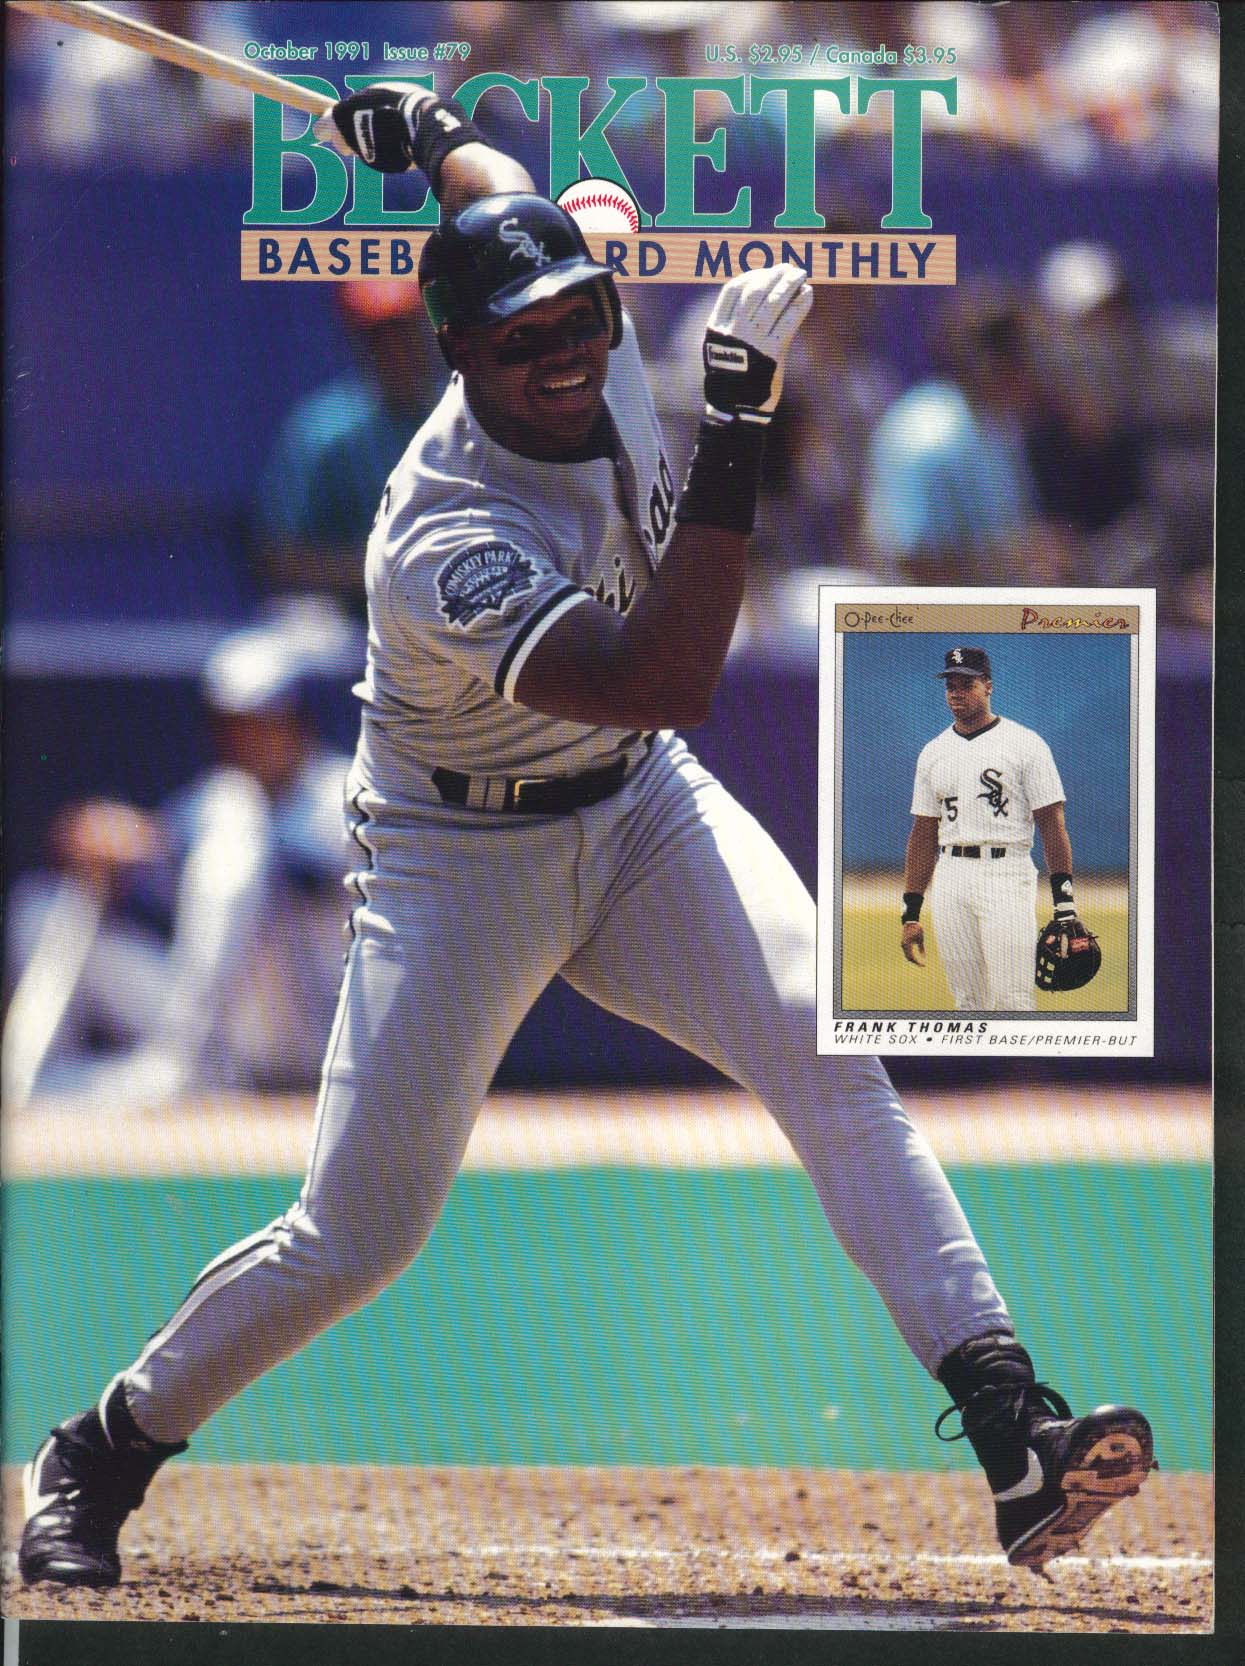 BECKETT Baseball Card Monthly Frank Thomas Roger Maris Tom Glavine 10 1991